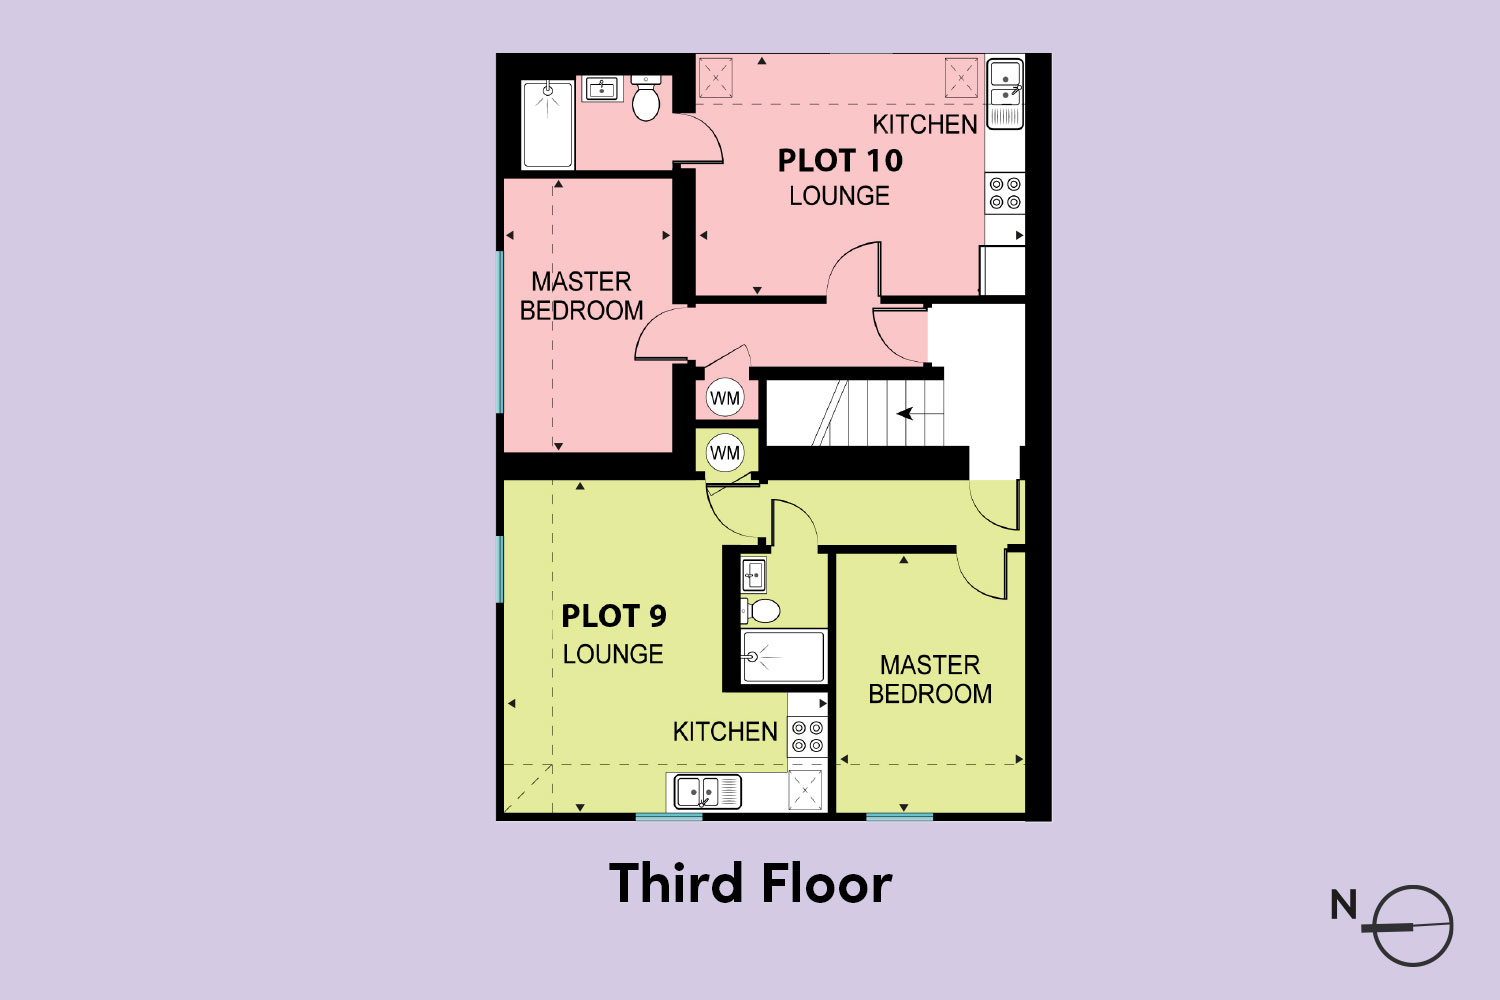 Third floor plans